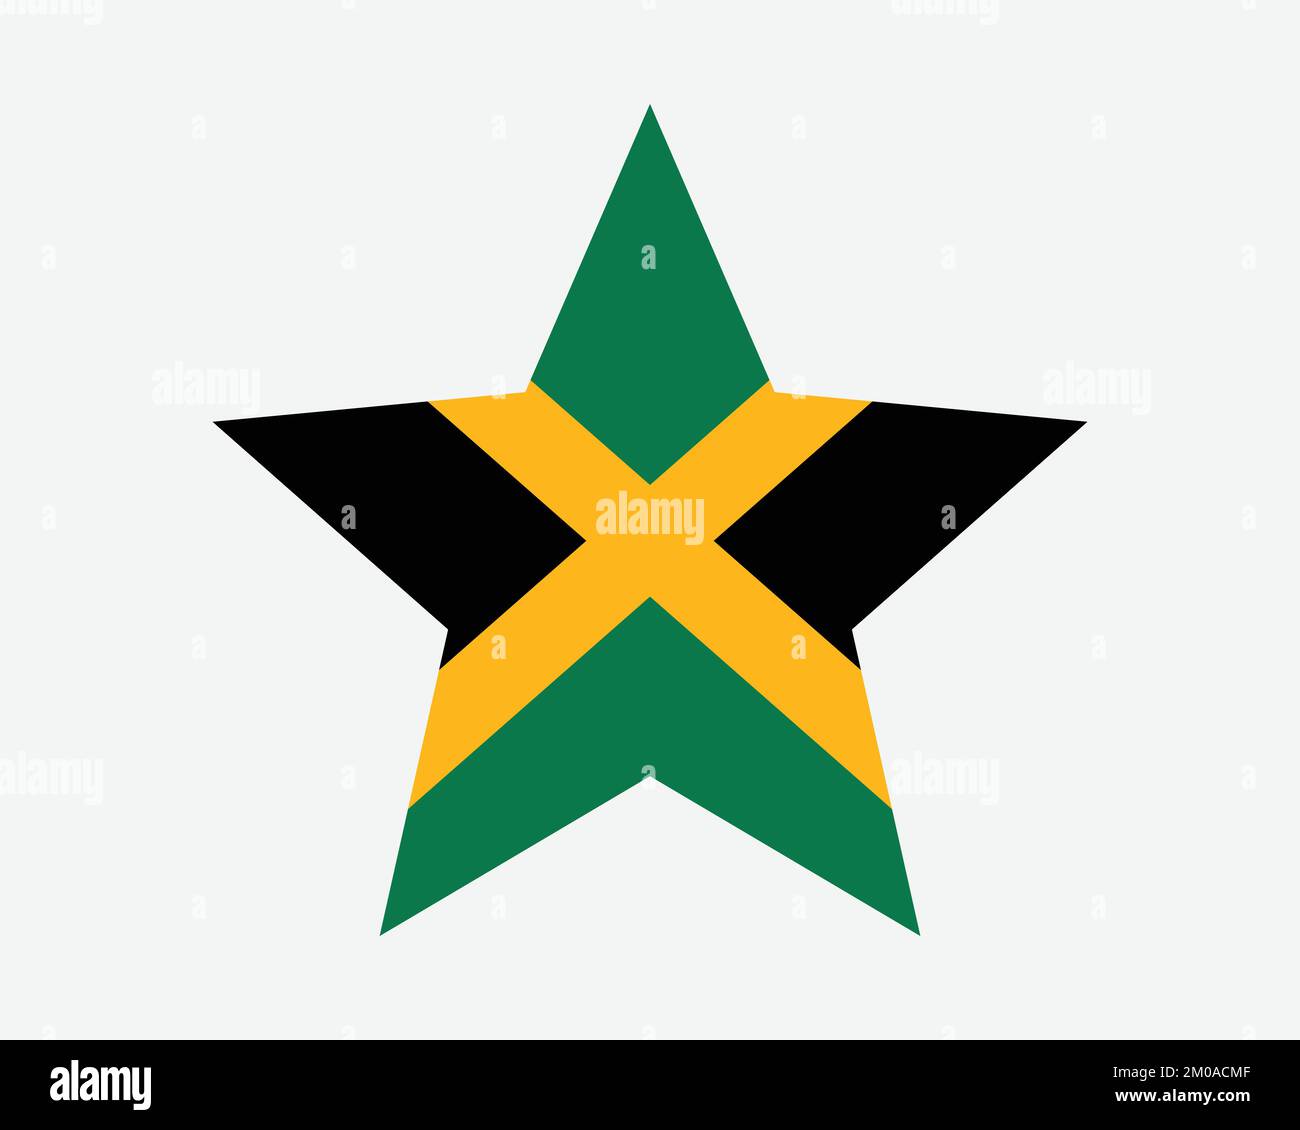 Jamaica Star Flag. Jamaican Star Shape Flag. Country National Banner Icon Symbol Vector Flat Artwork Graphic Illustration Stock Vector